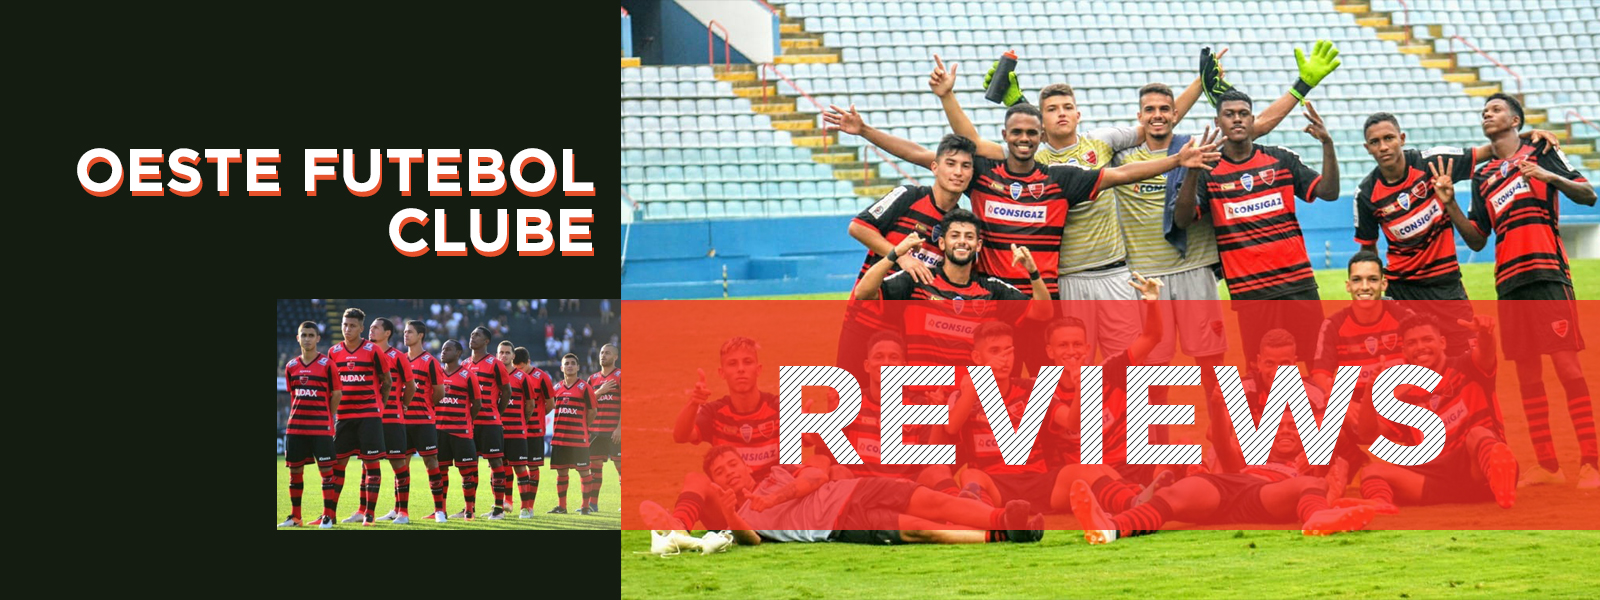 Oeste Futebol Clube Reviews